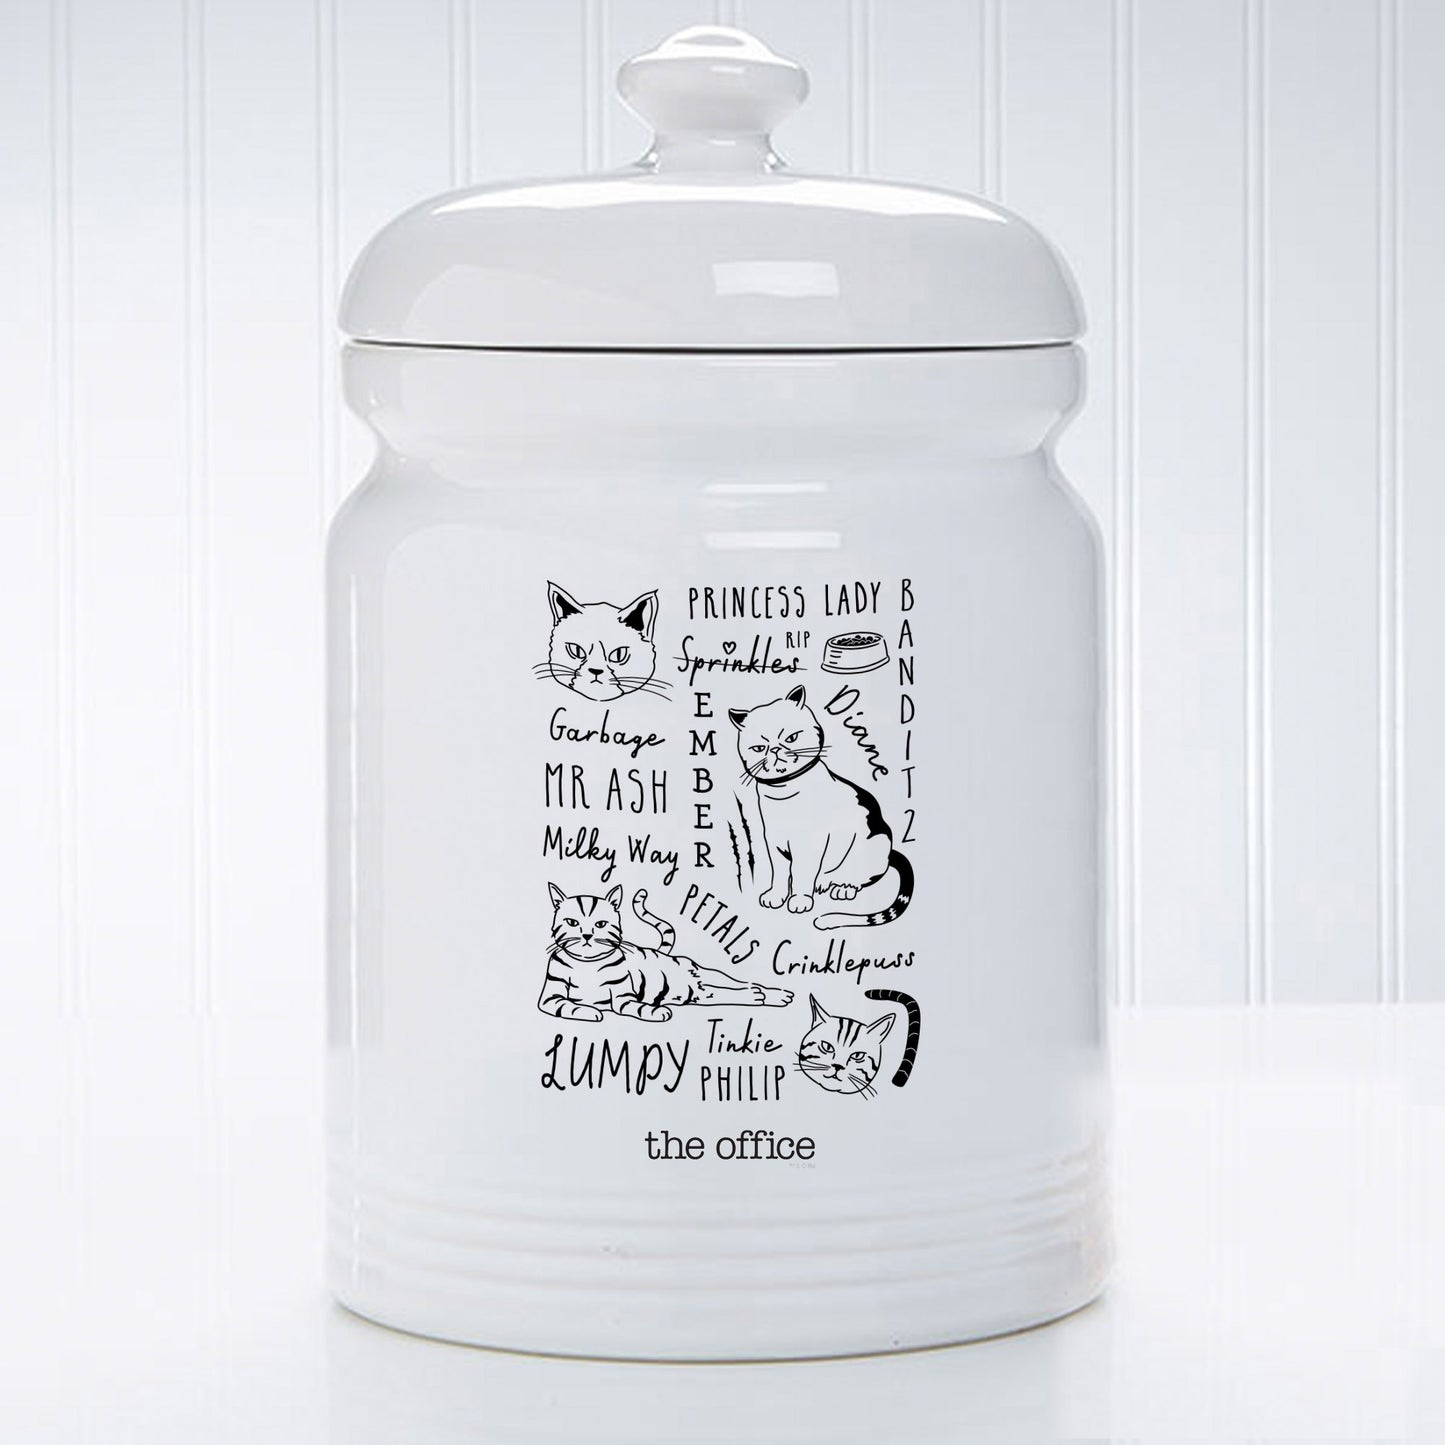 The Office Angela's Cat Mash-Up Treat Jar